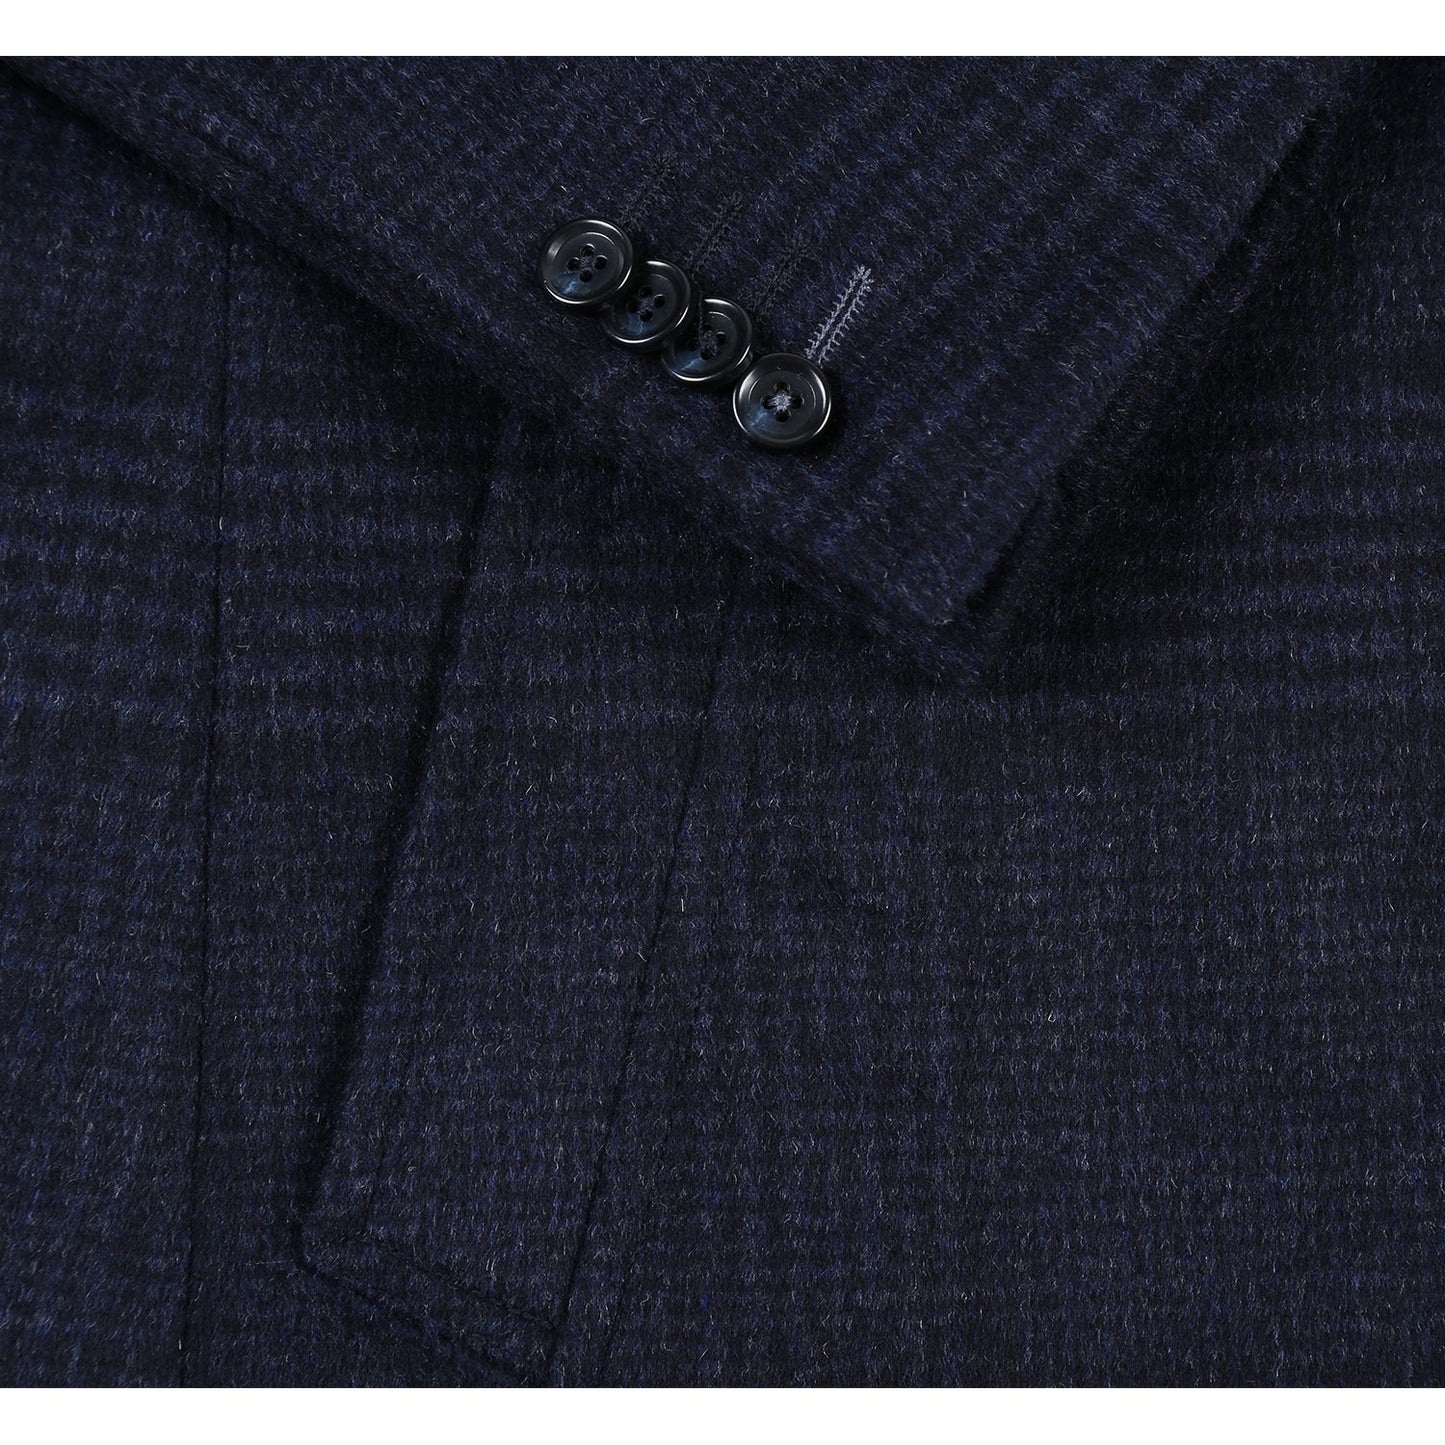 EL53-55-495 English Laundry Wool Blend Blue/Grey Car Coat